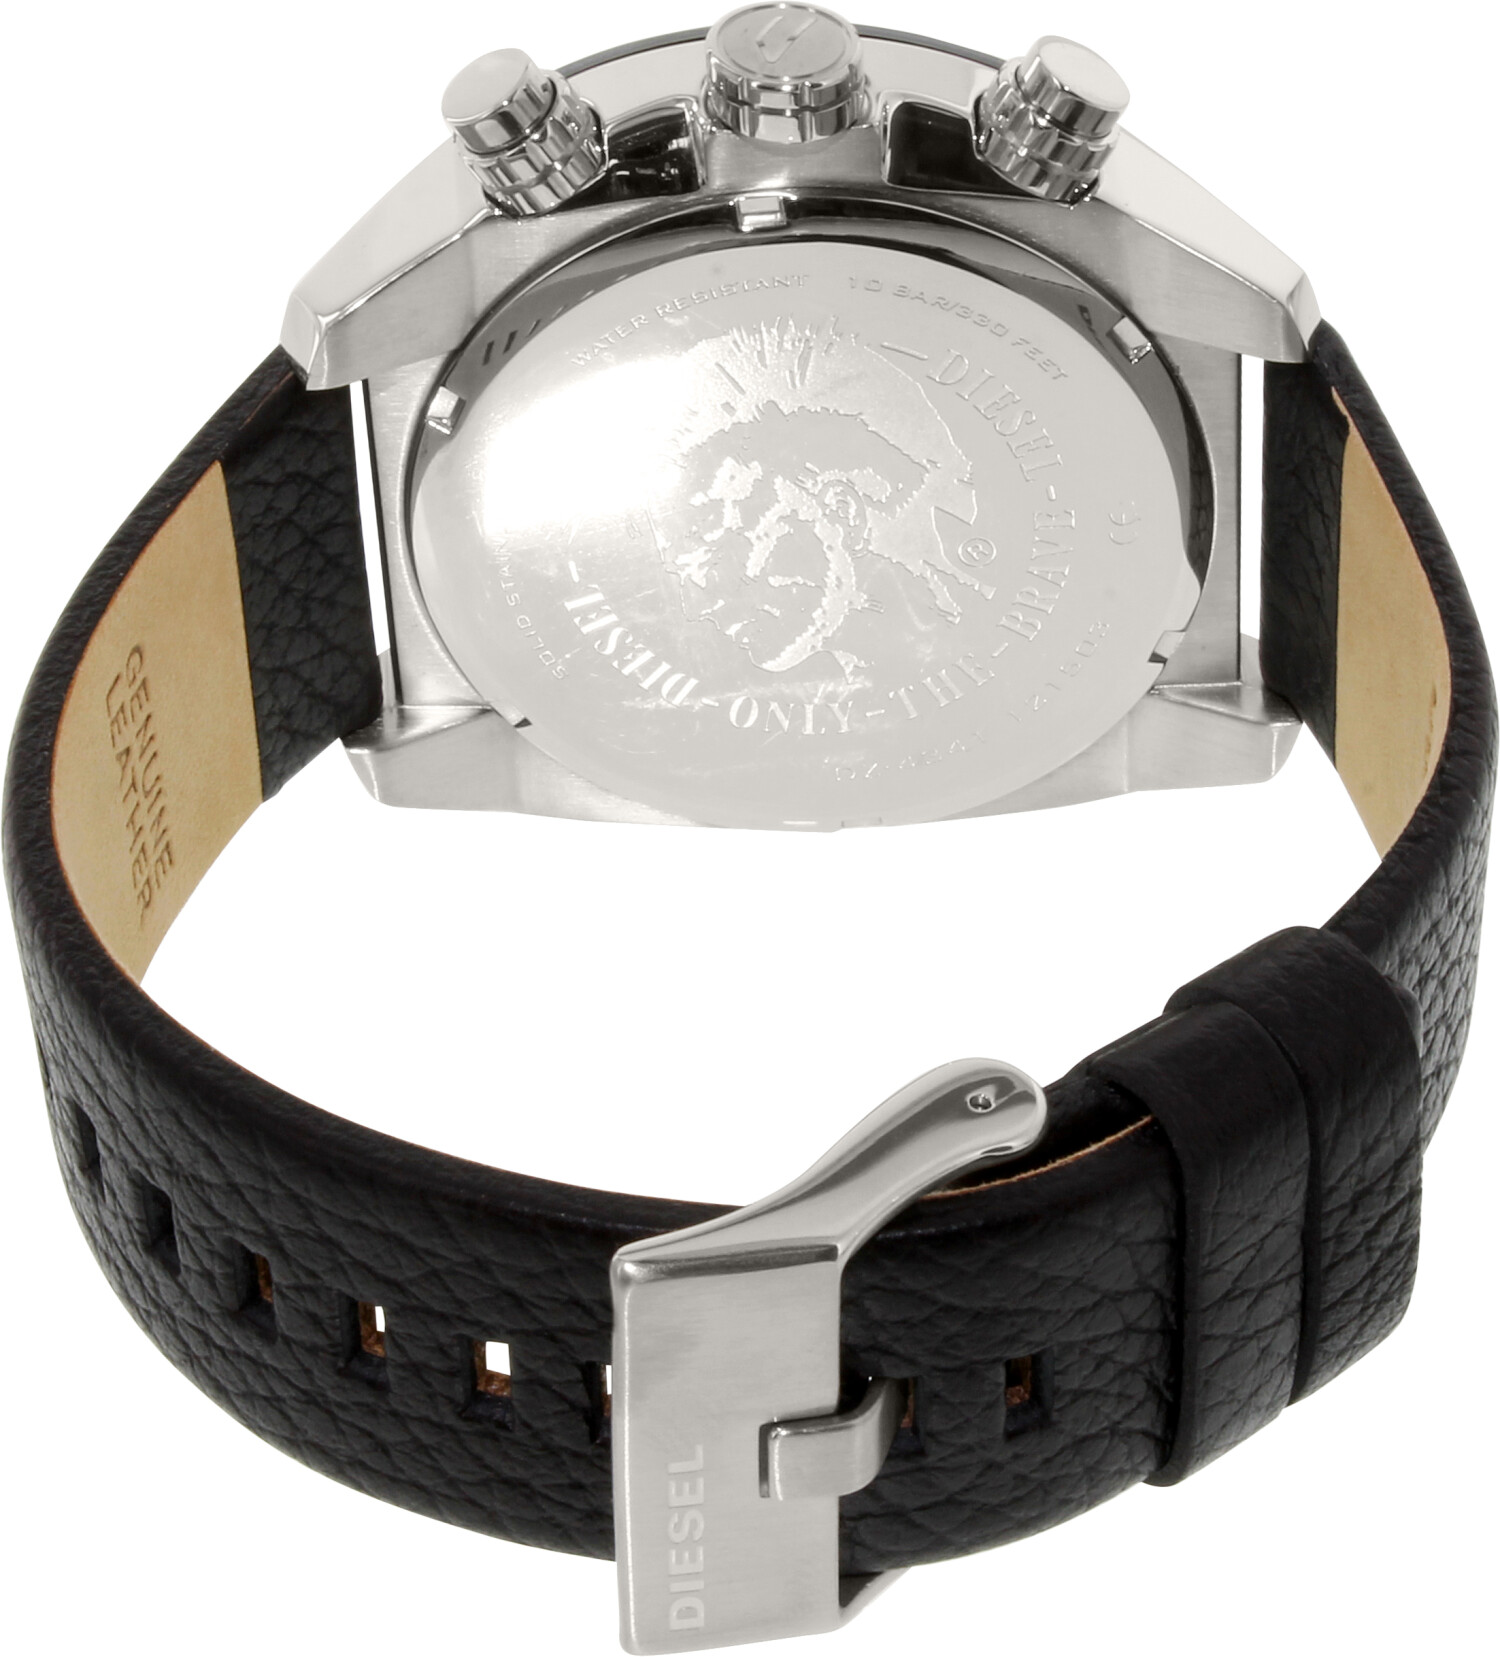 Diesel Men's Overflow Black Dial Watch - DZ4341 - image 3 of 3